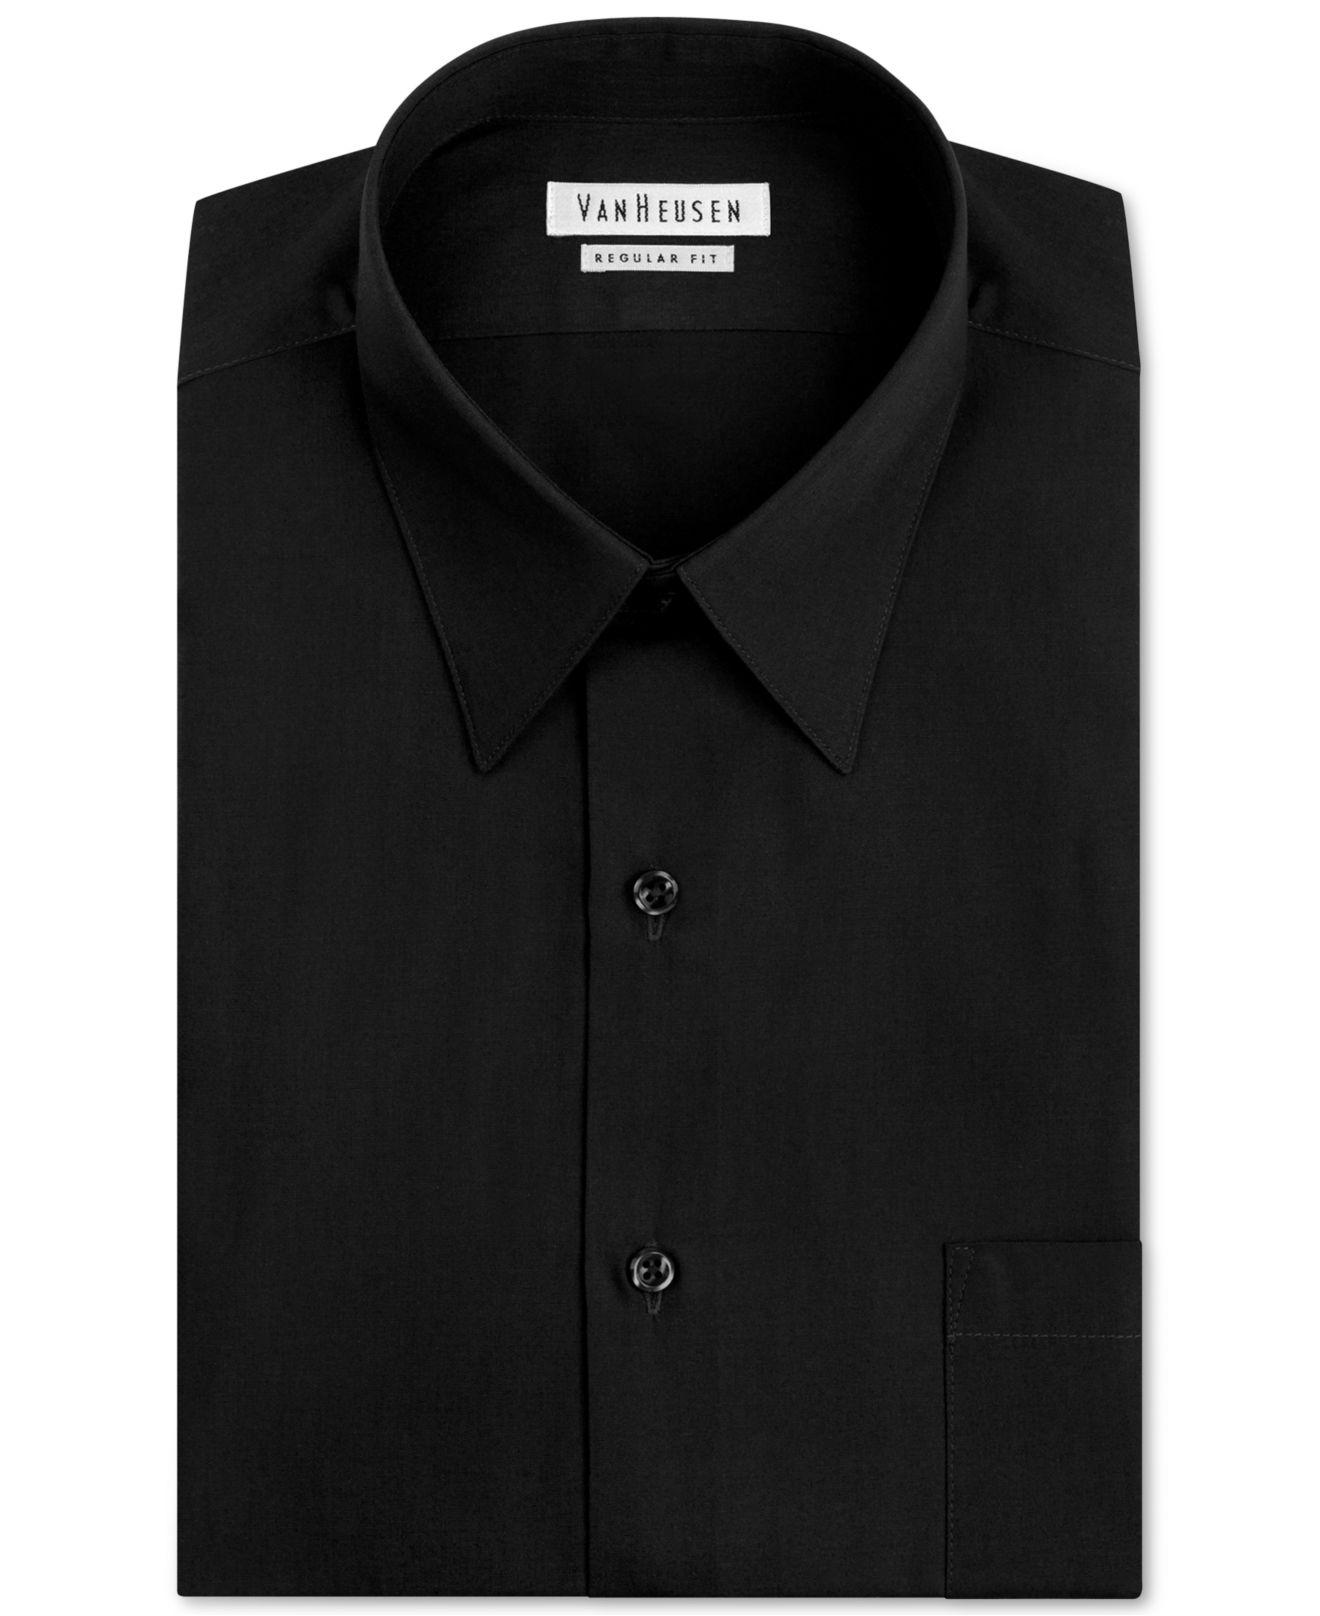 Lyst - Van Heusen Men's Classic-fit Poplin Dress Shirt in Black for Men